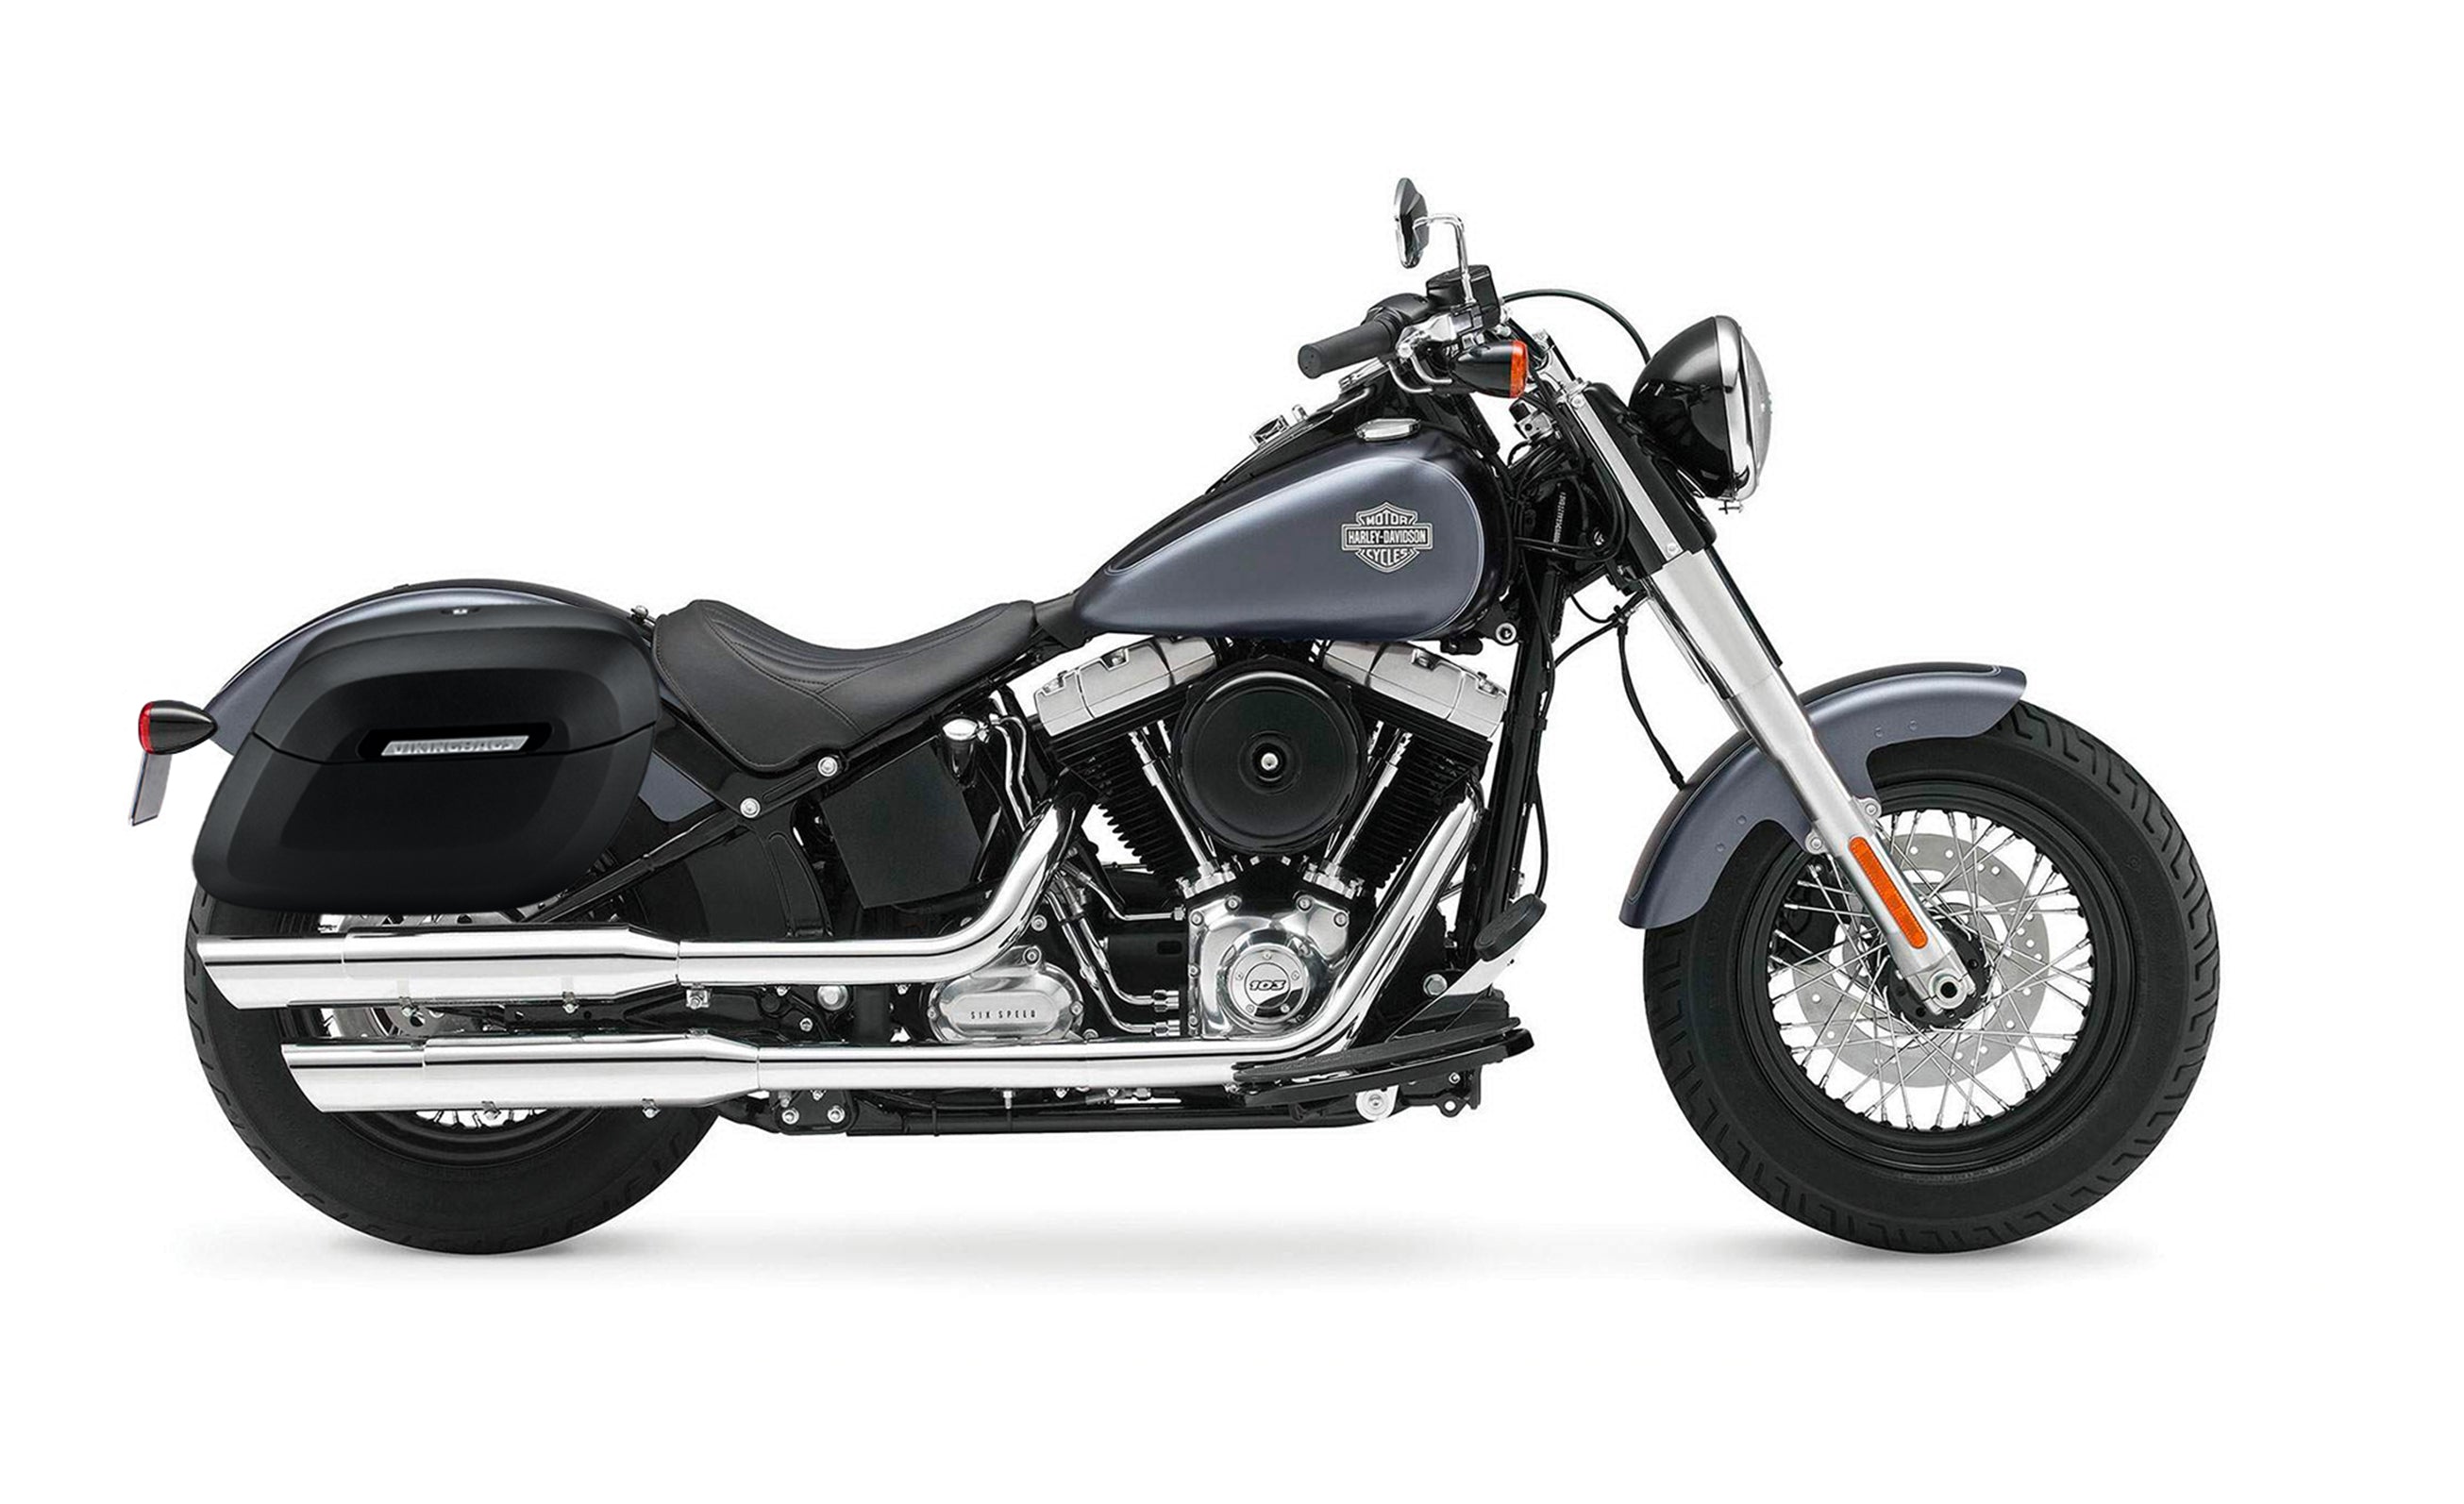 40L - Lamellar Raven XL Leather Covered Motorcycle Hard Saddlebags for Harley Softail Slim FLS on Bike Photo @expand